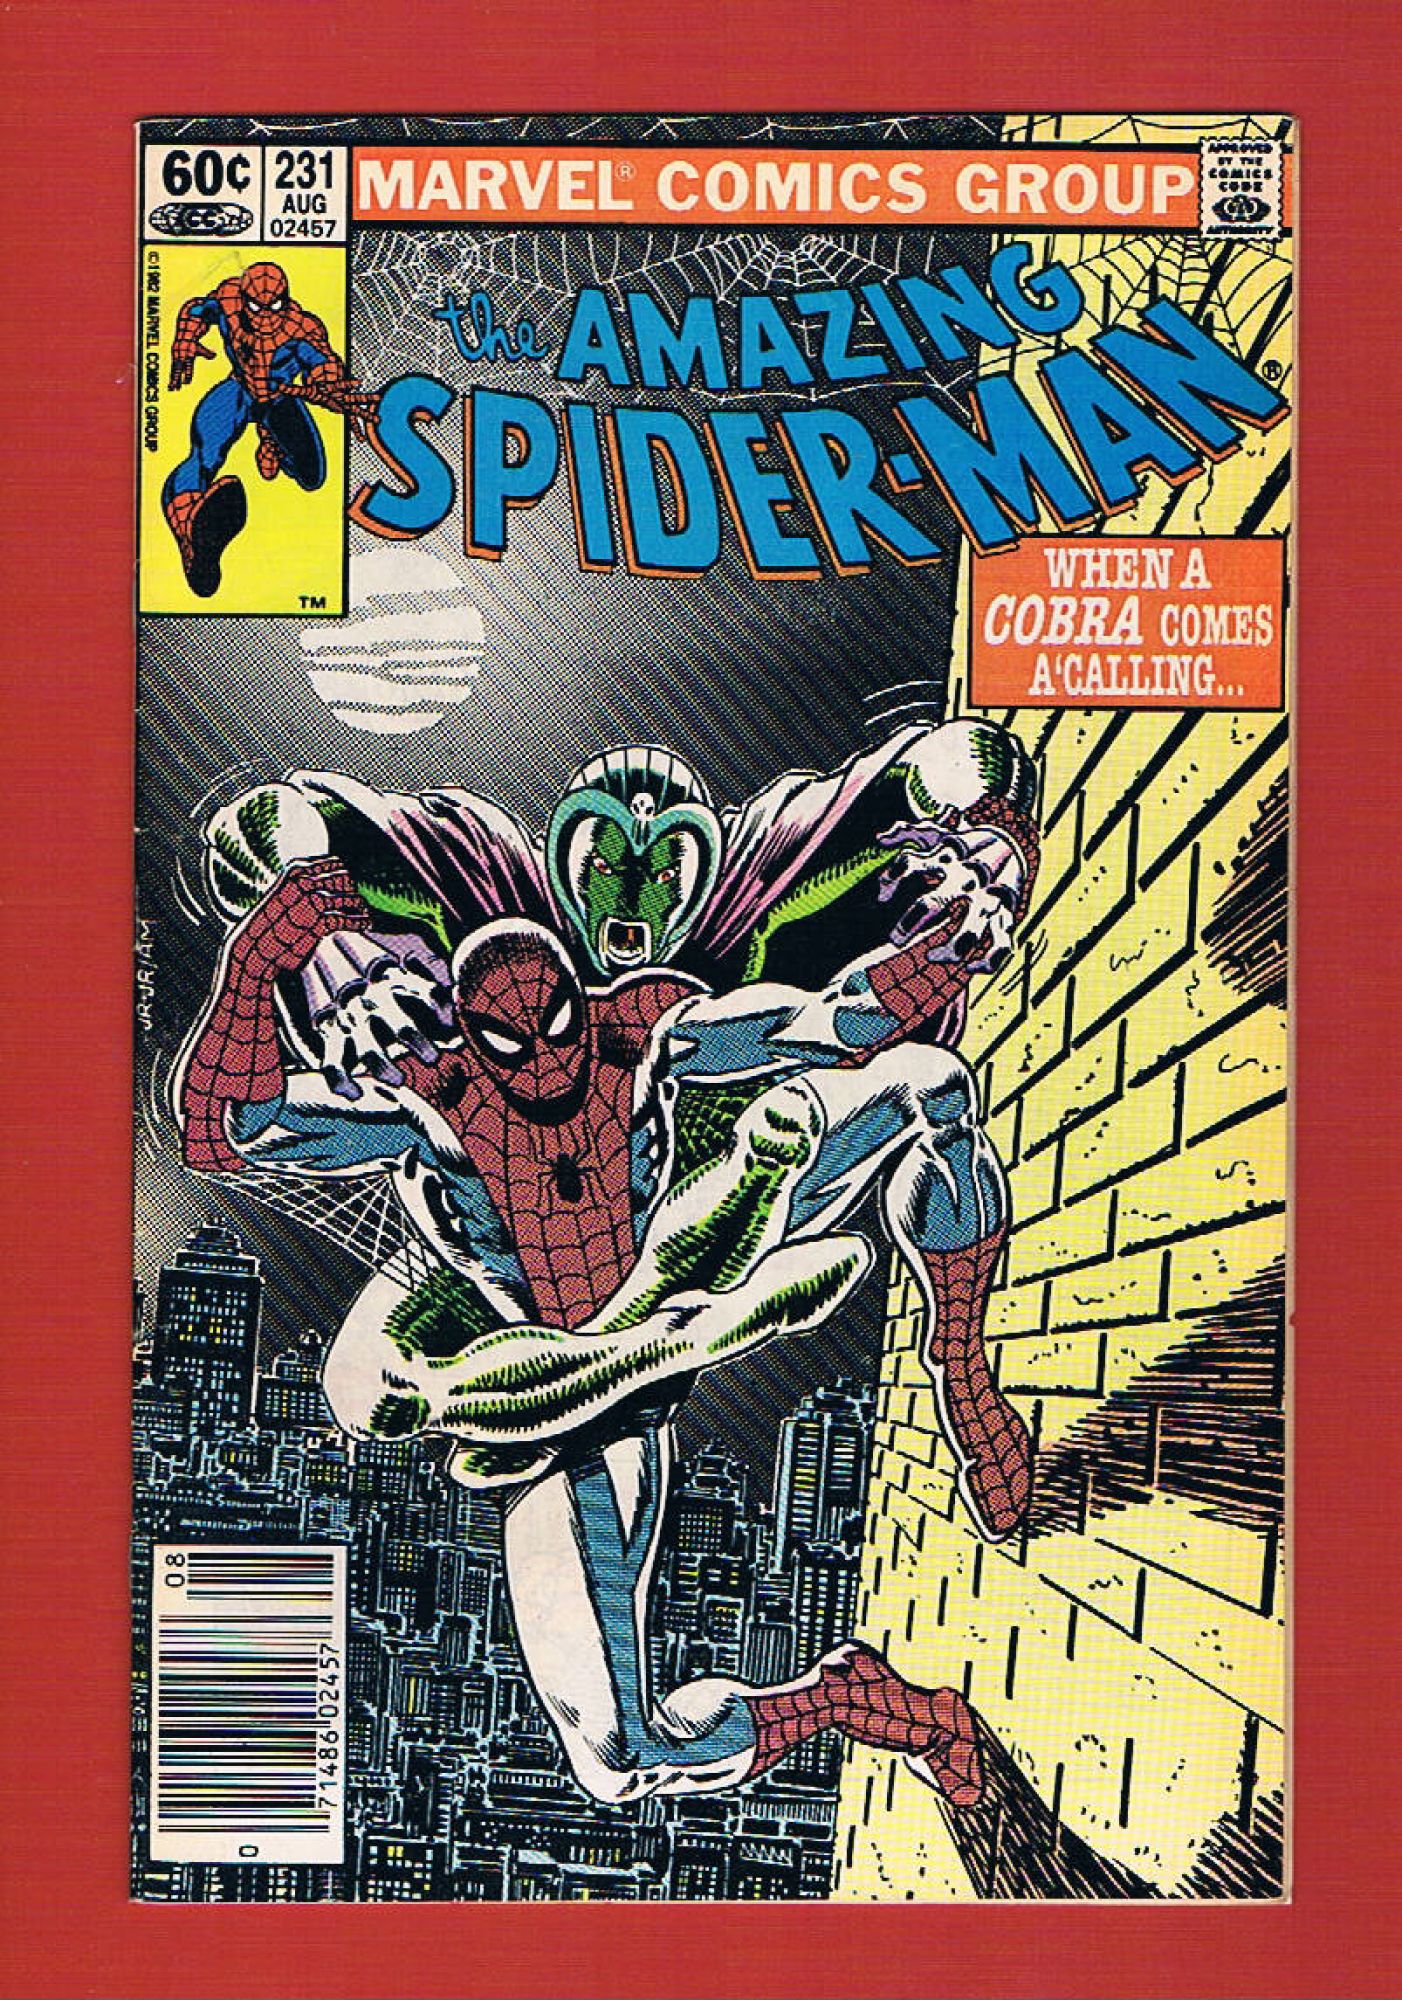 Amazing Spider-Man #231, Aug 1982, 7.0 F/VF